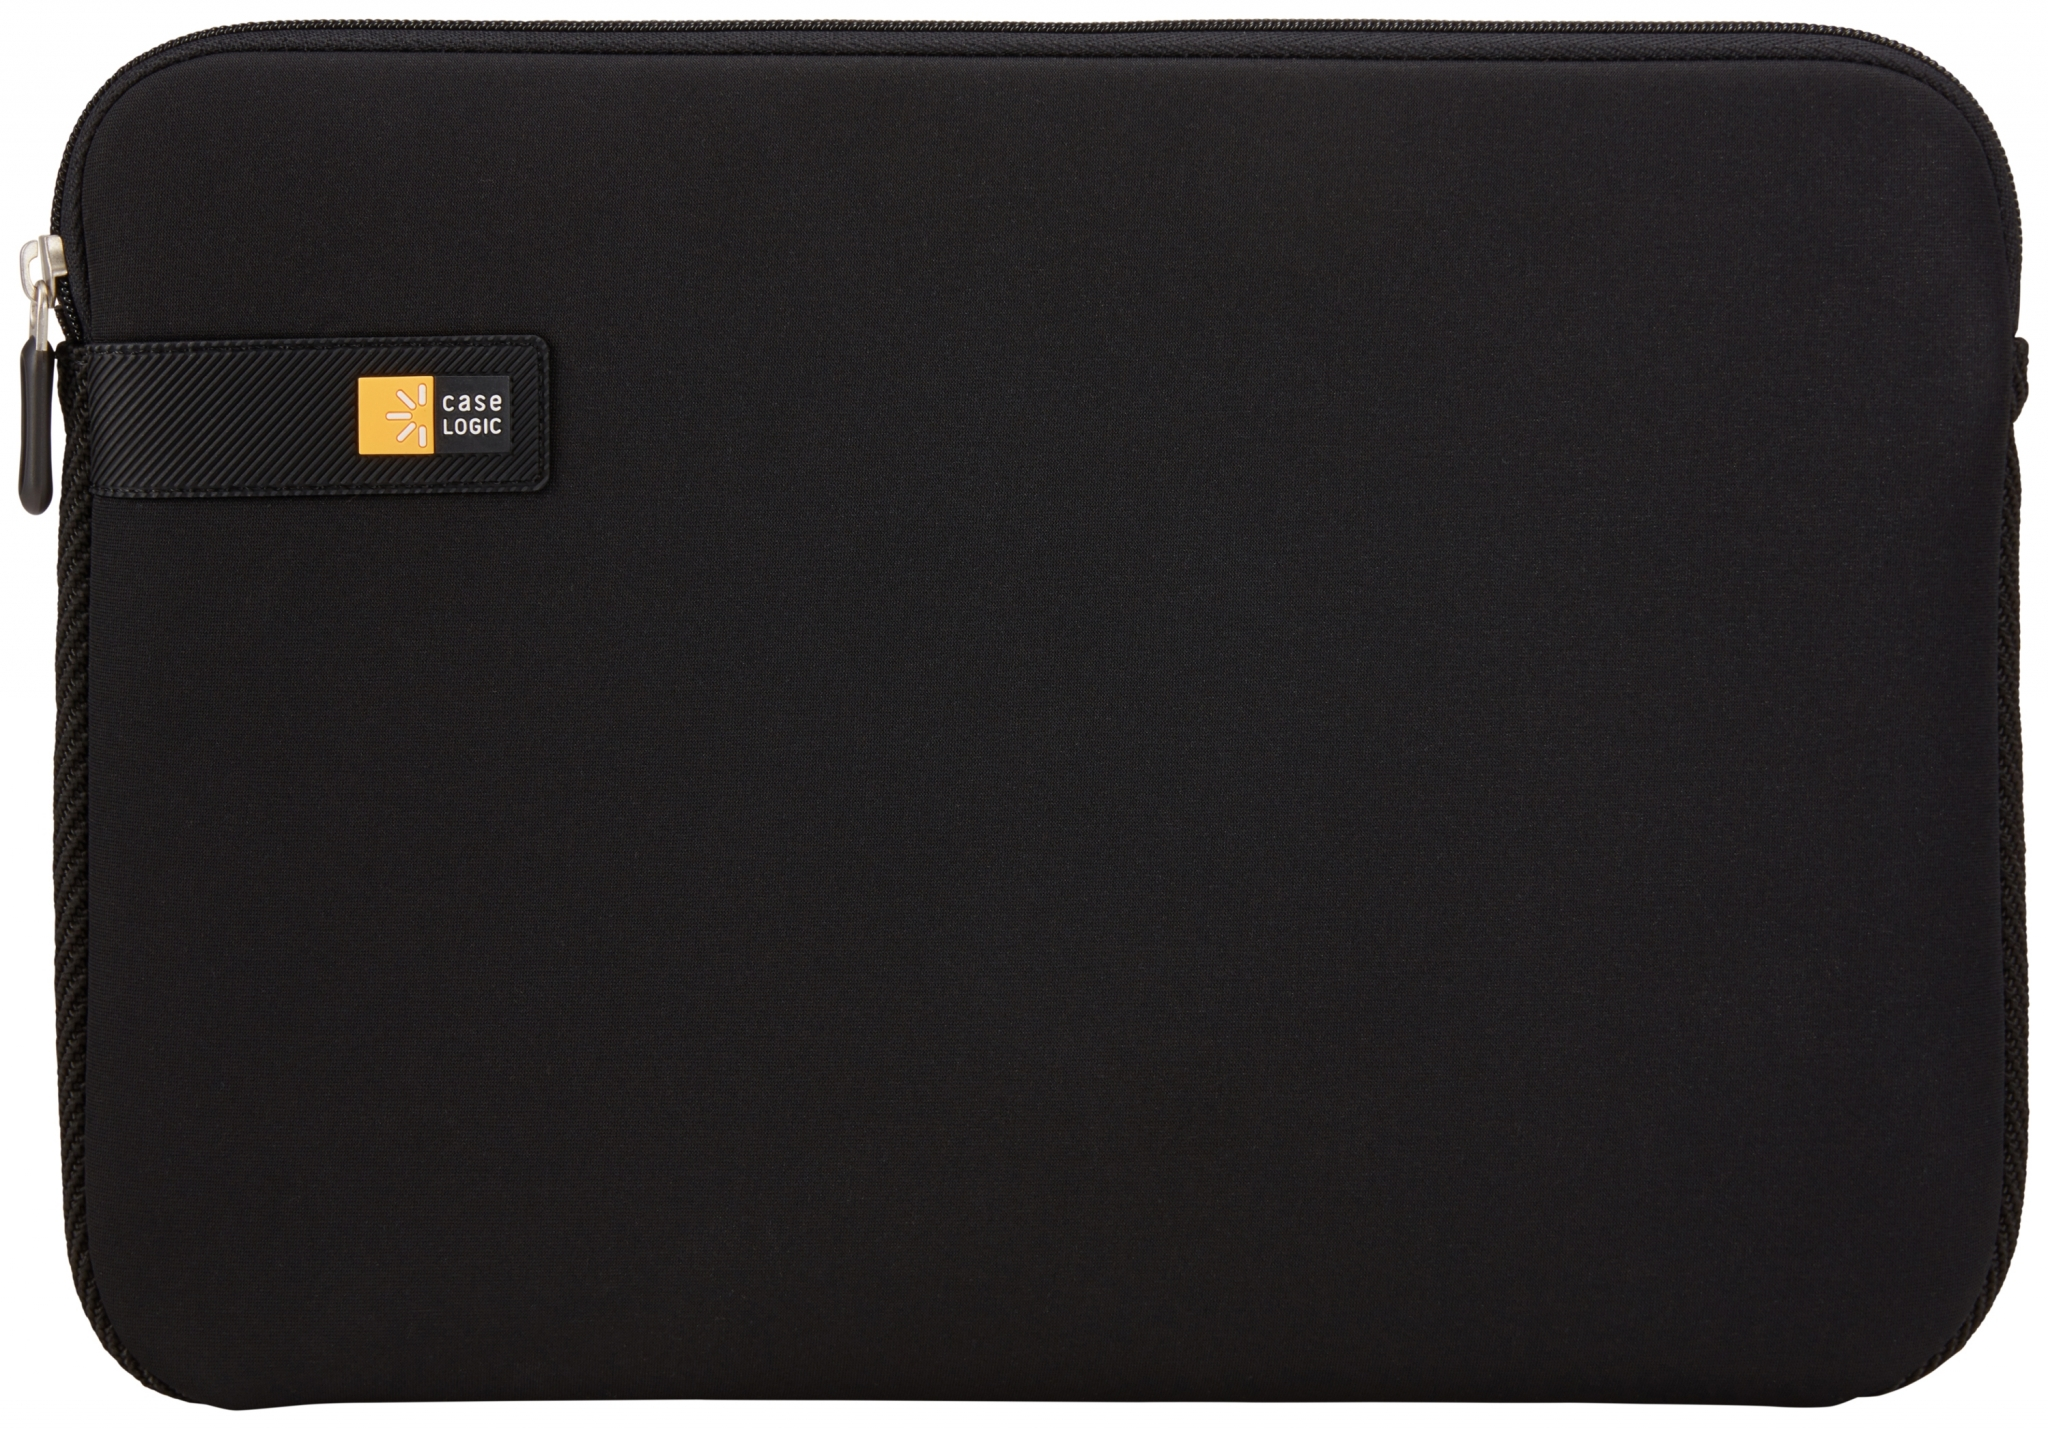 Huhlle Slim Pro für and 12\' Laptop 13\' Schwarz LOGIC Case Schwarz - Polyester, Notebooksleeve Sleeve Universal CASE MacBook Logic -